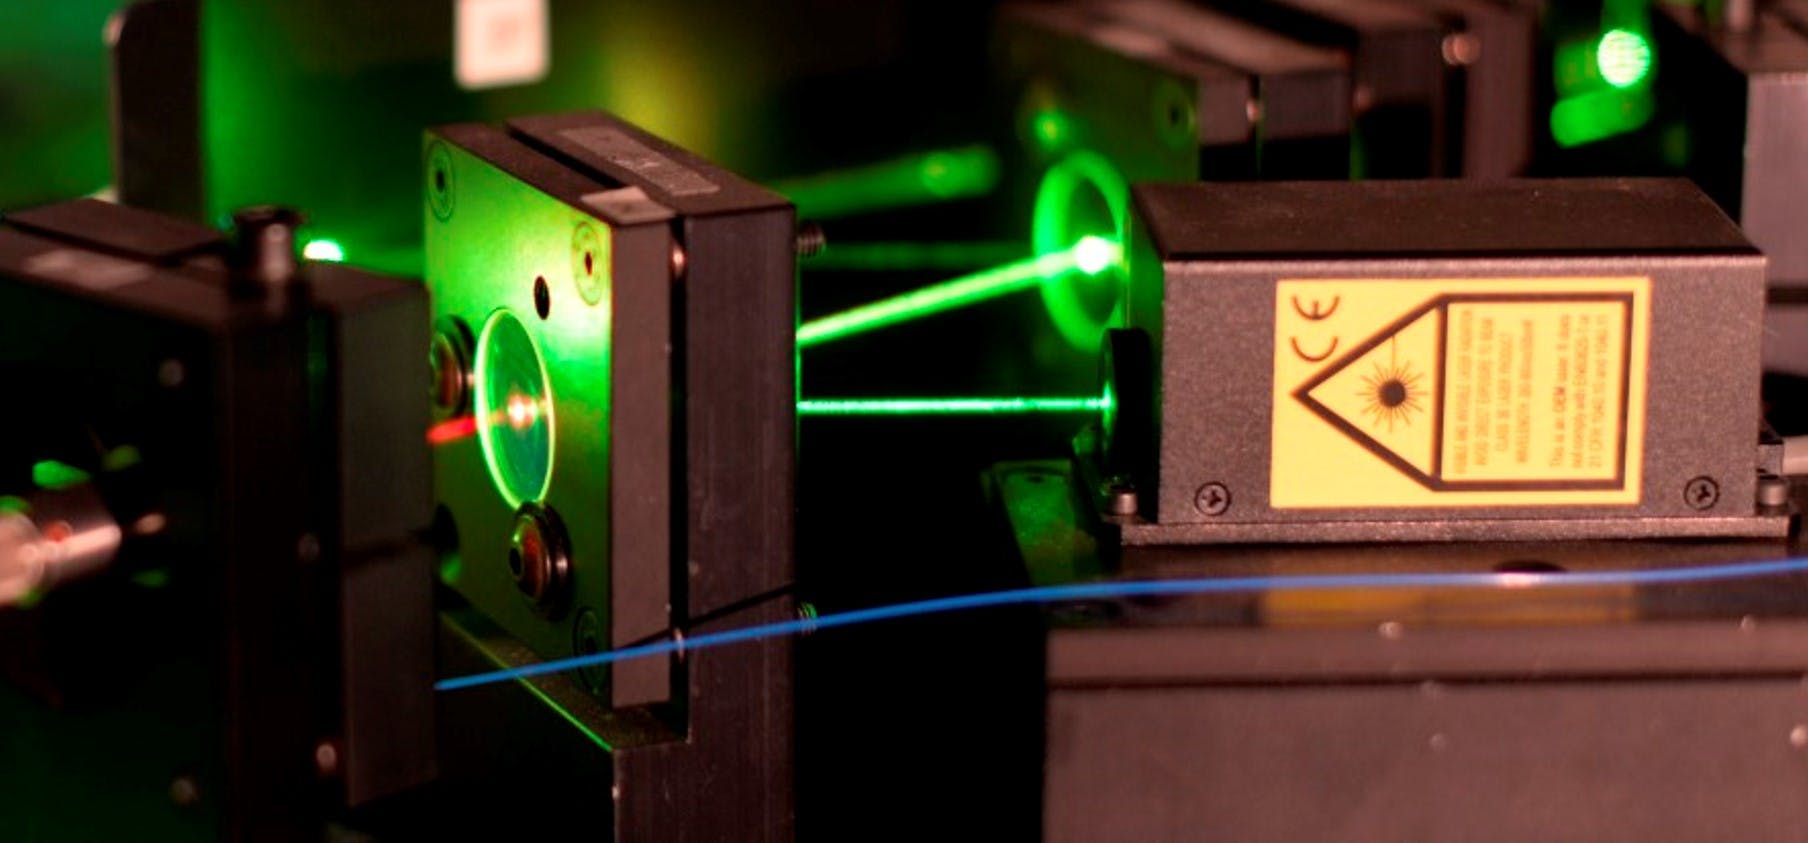 Photonics laser